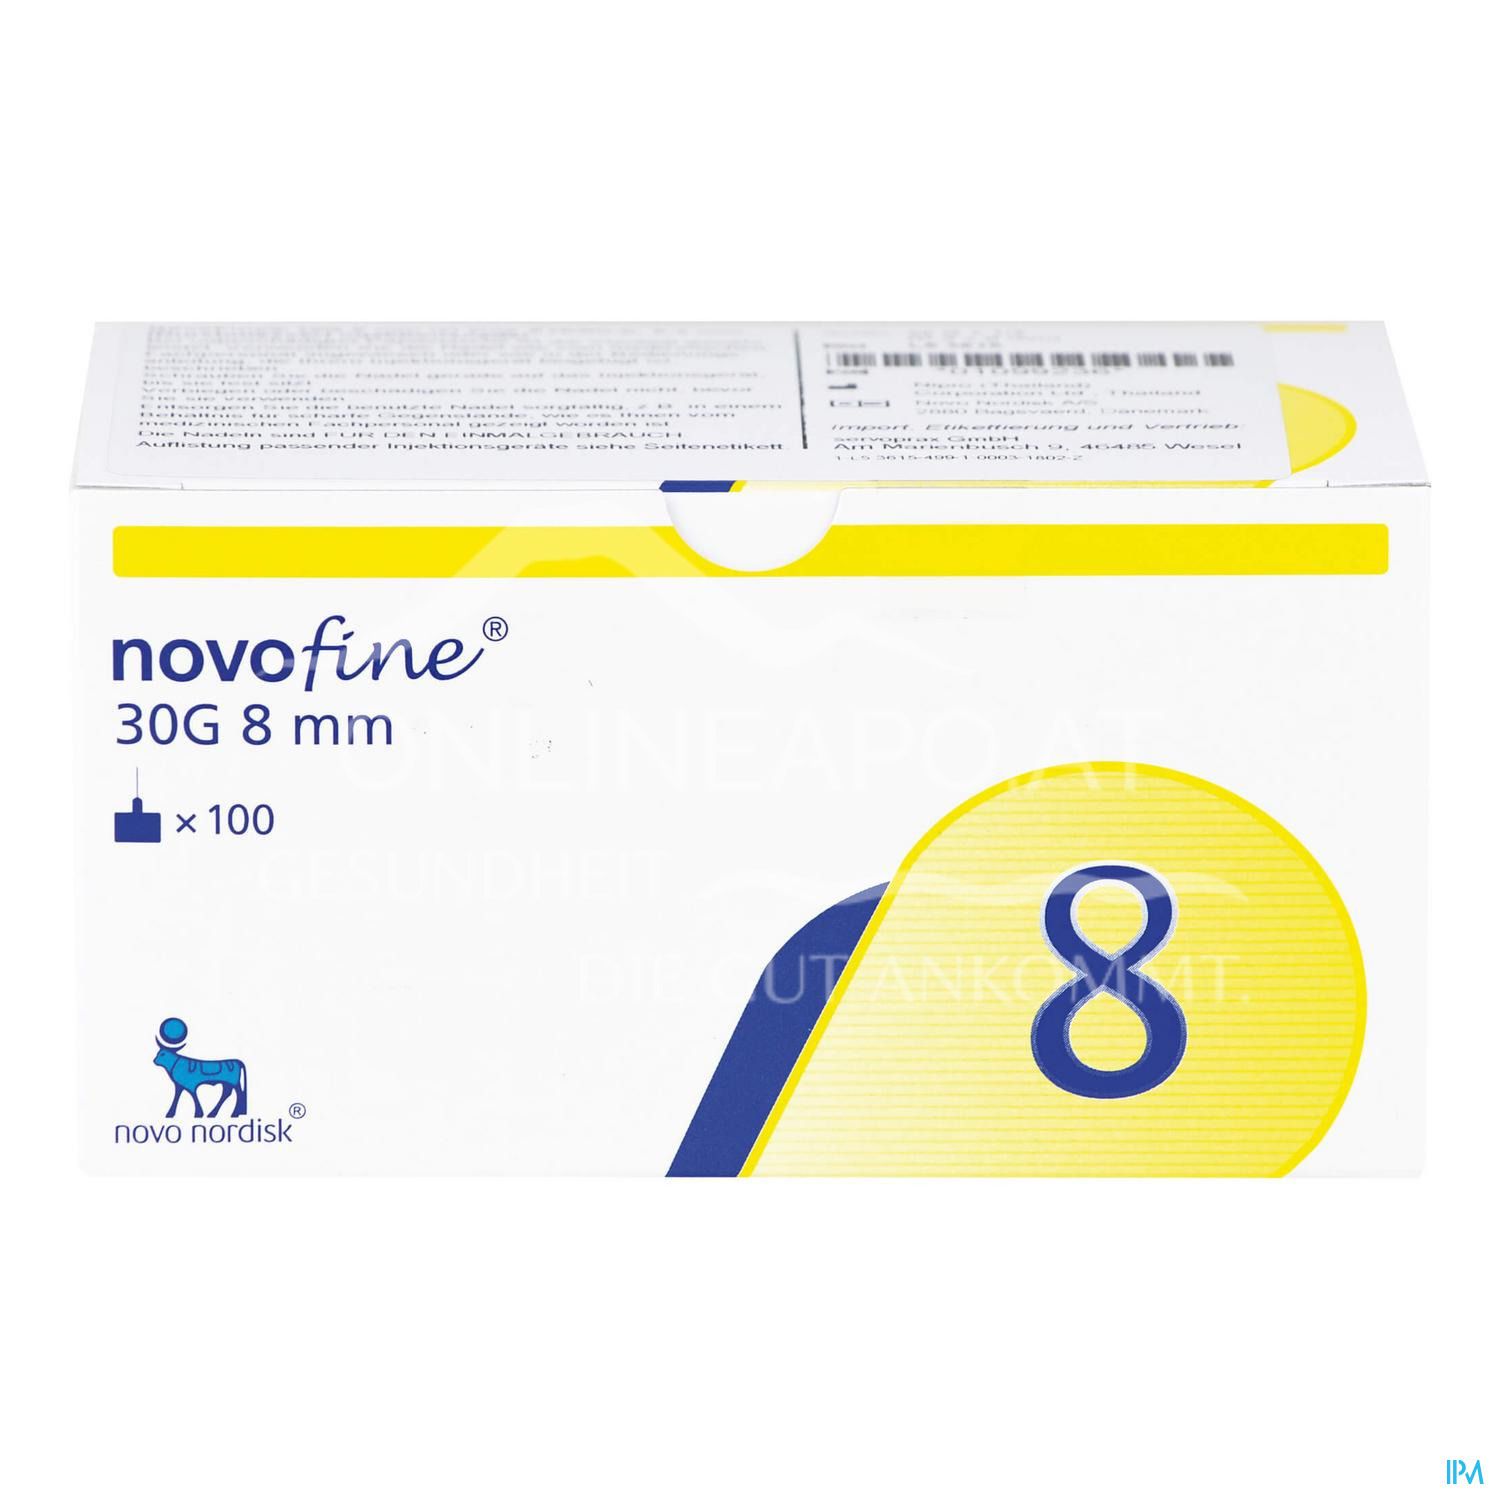  NovoFine® 8 mm Kanülen 30 G (0,03 x 8 mm) Insulin-Pennadeln 